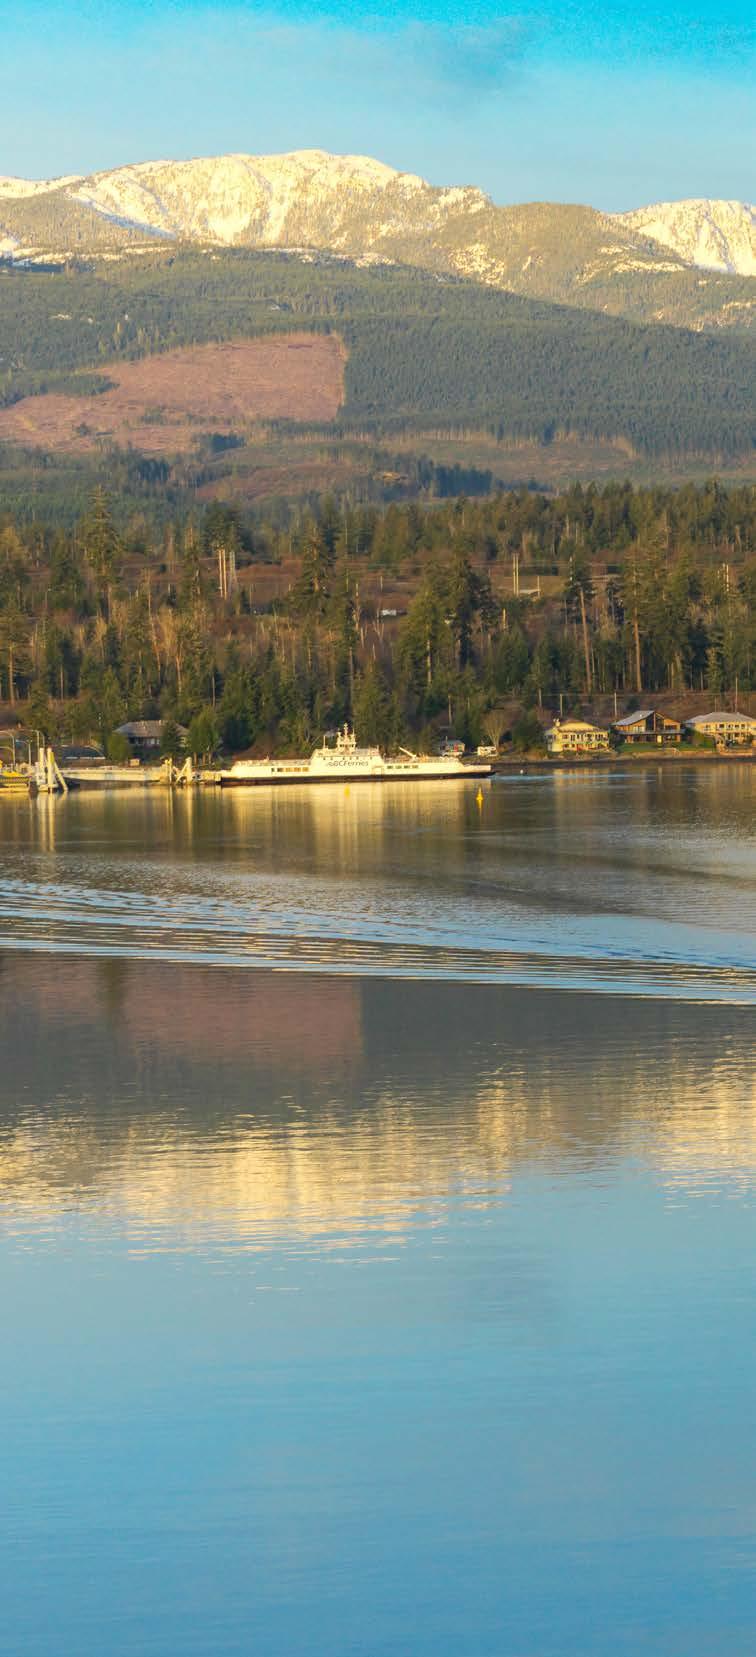 British Columbia Ferry Services Inc.